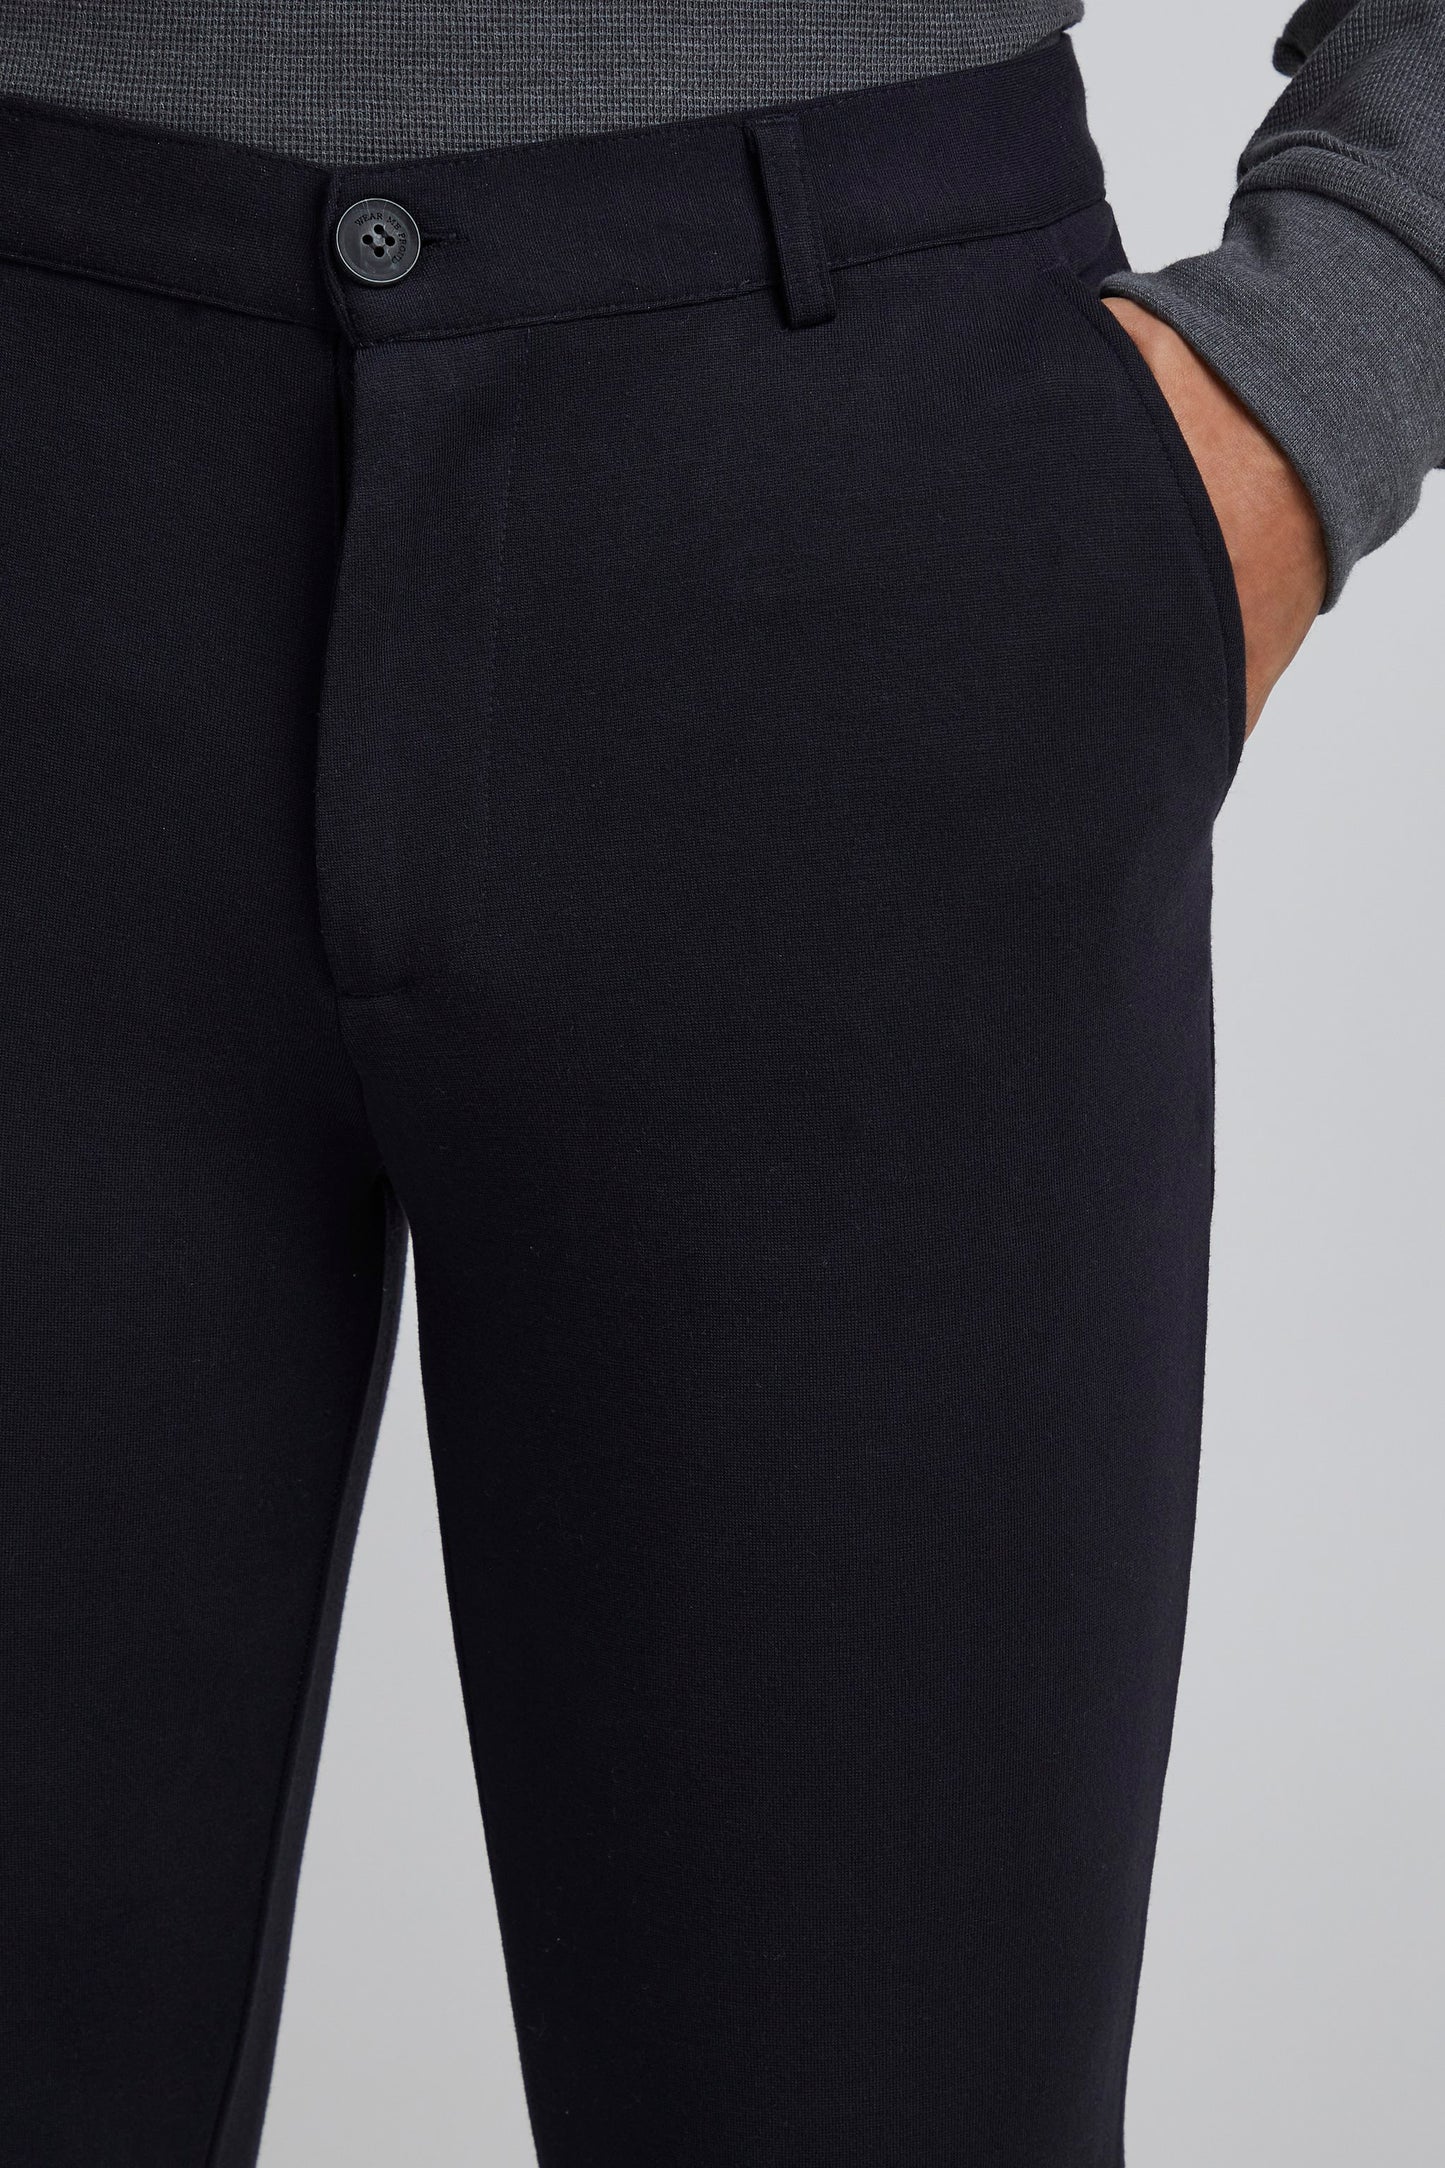 Dark Navy Trousers - Super Stretch Slim Fit